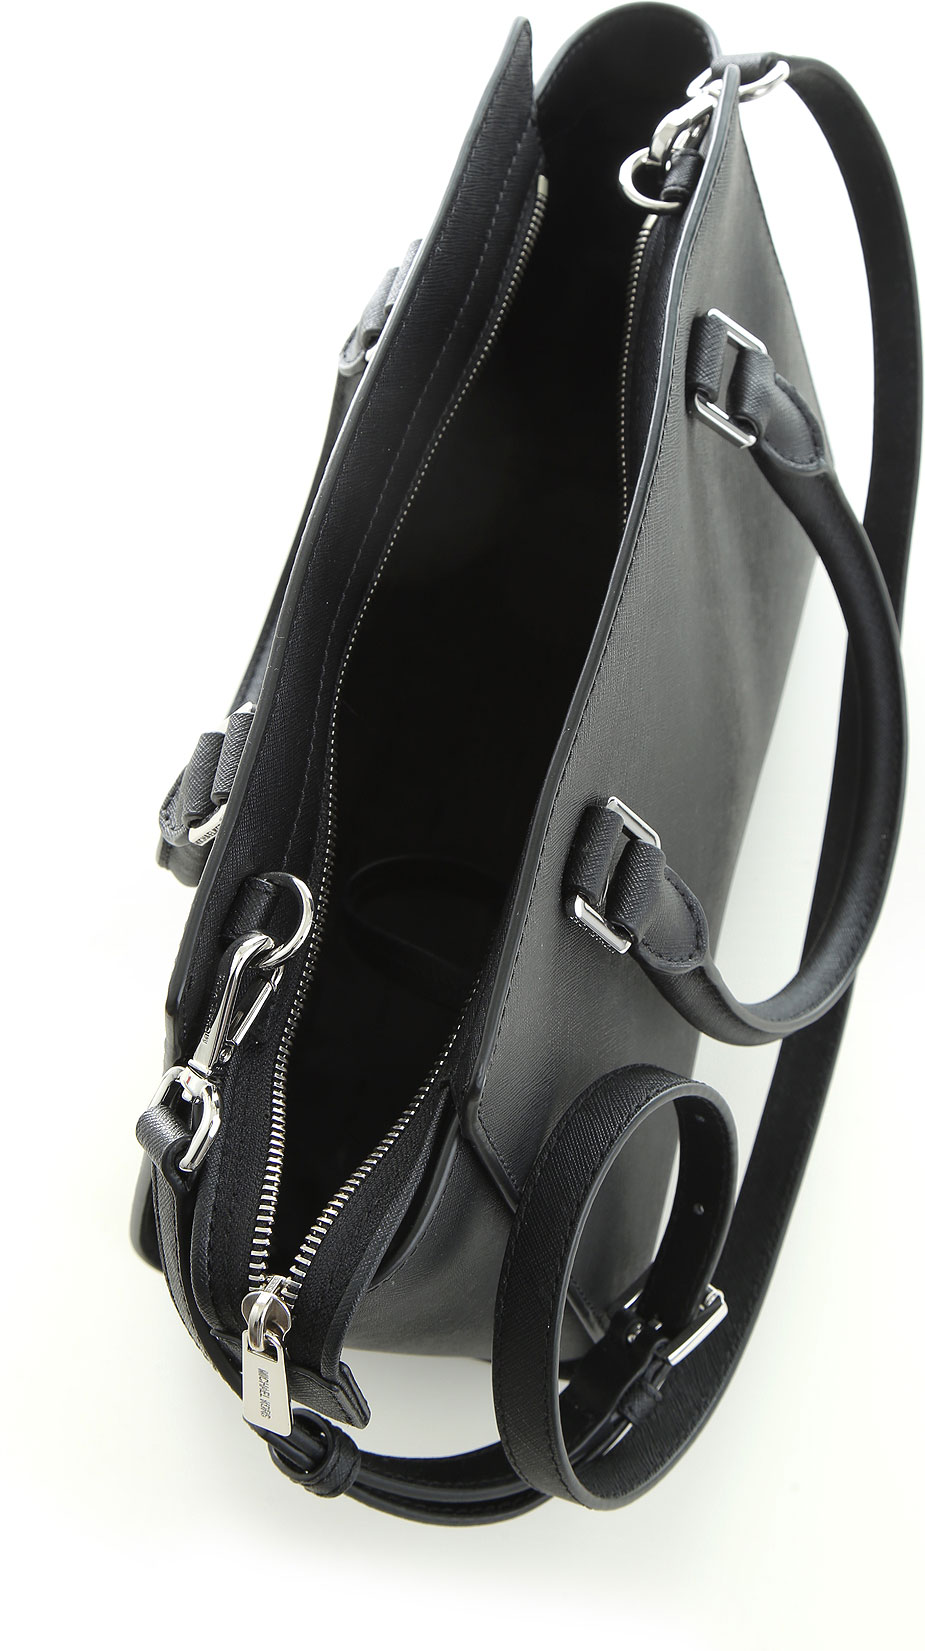 Handbags Michael Kors, Style code: 30t3slms2l-bkl-A424